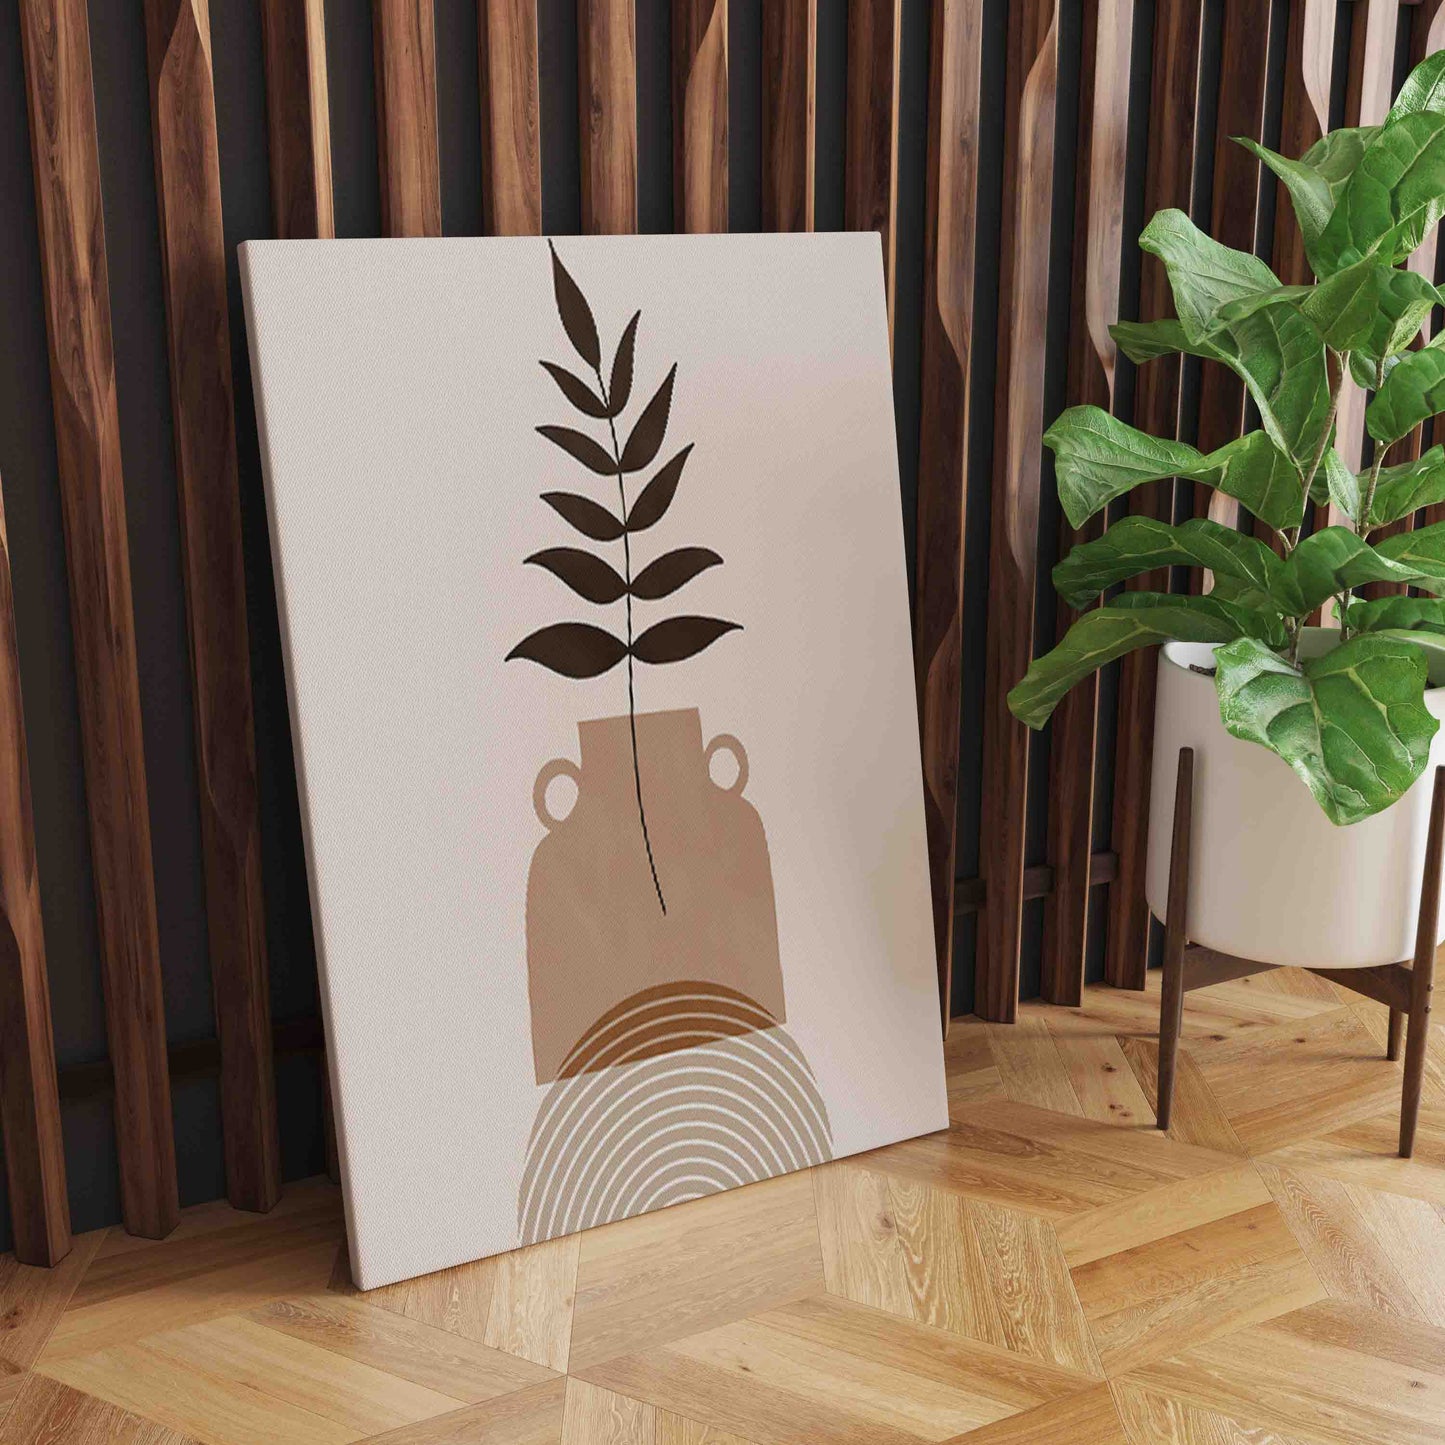 Monstera Leaves Geometric Abstract Boho Wall Art: Nordic Design in Beige for Living Room Decor S04E31